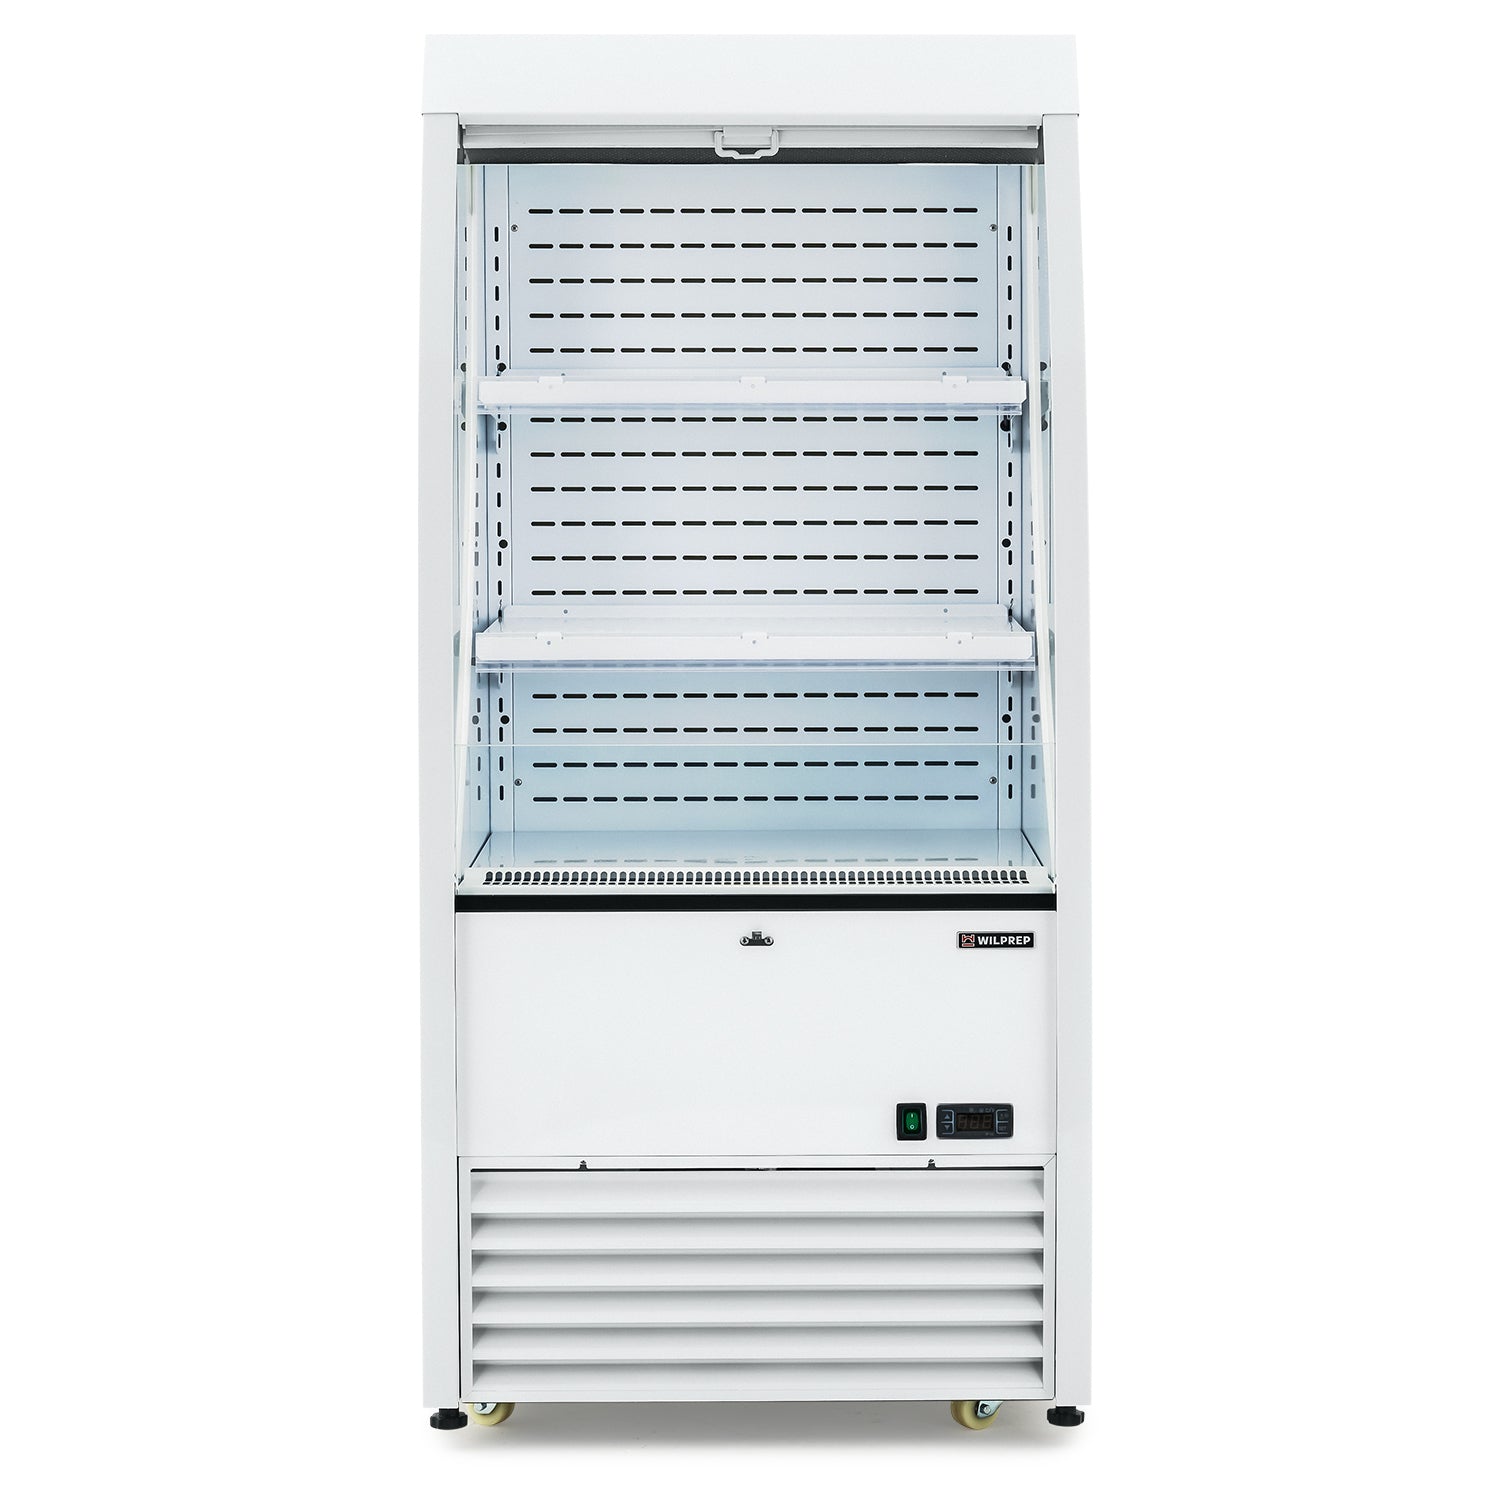 27" Vertical Open Air Merchandiser Refrigerator 6.7 cu. ft. Capacity